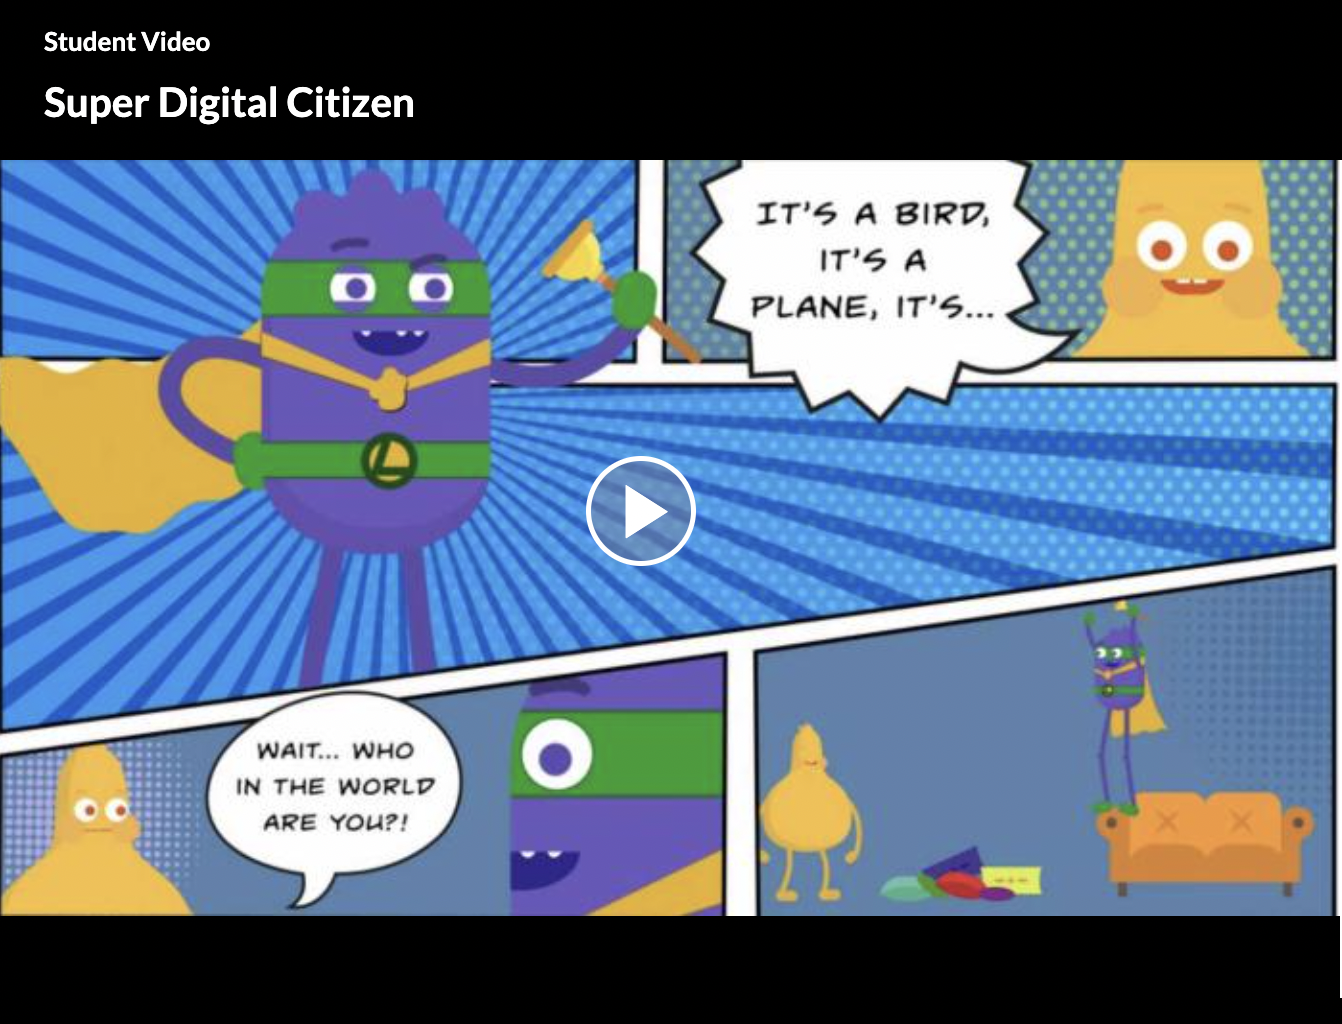 Be a Super Digital Citizen